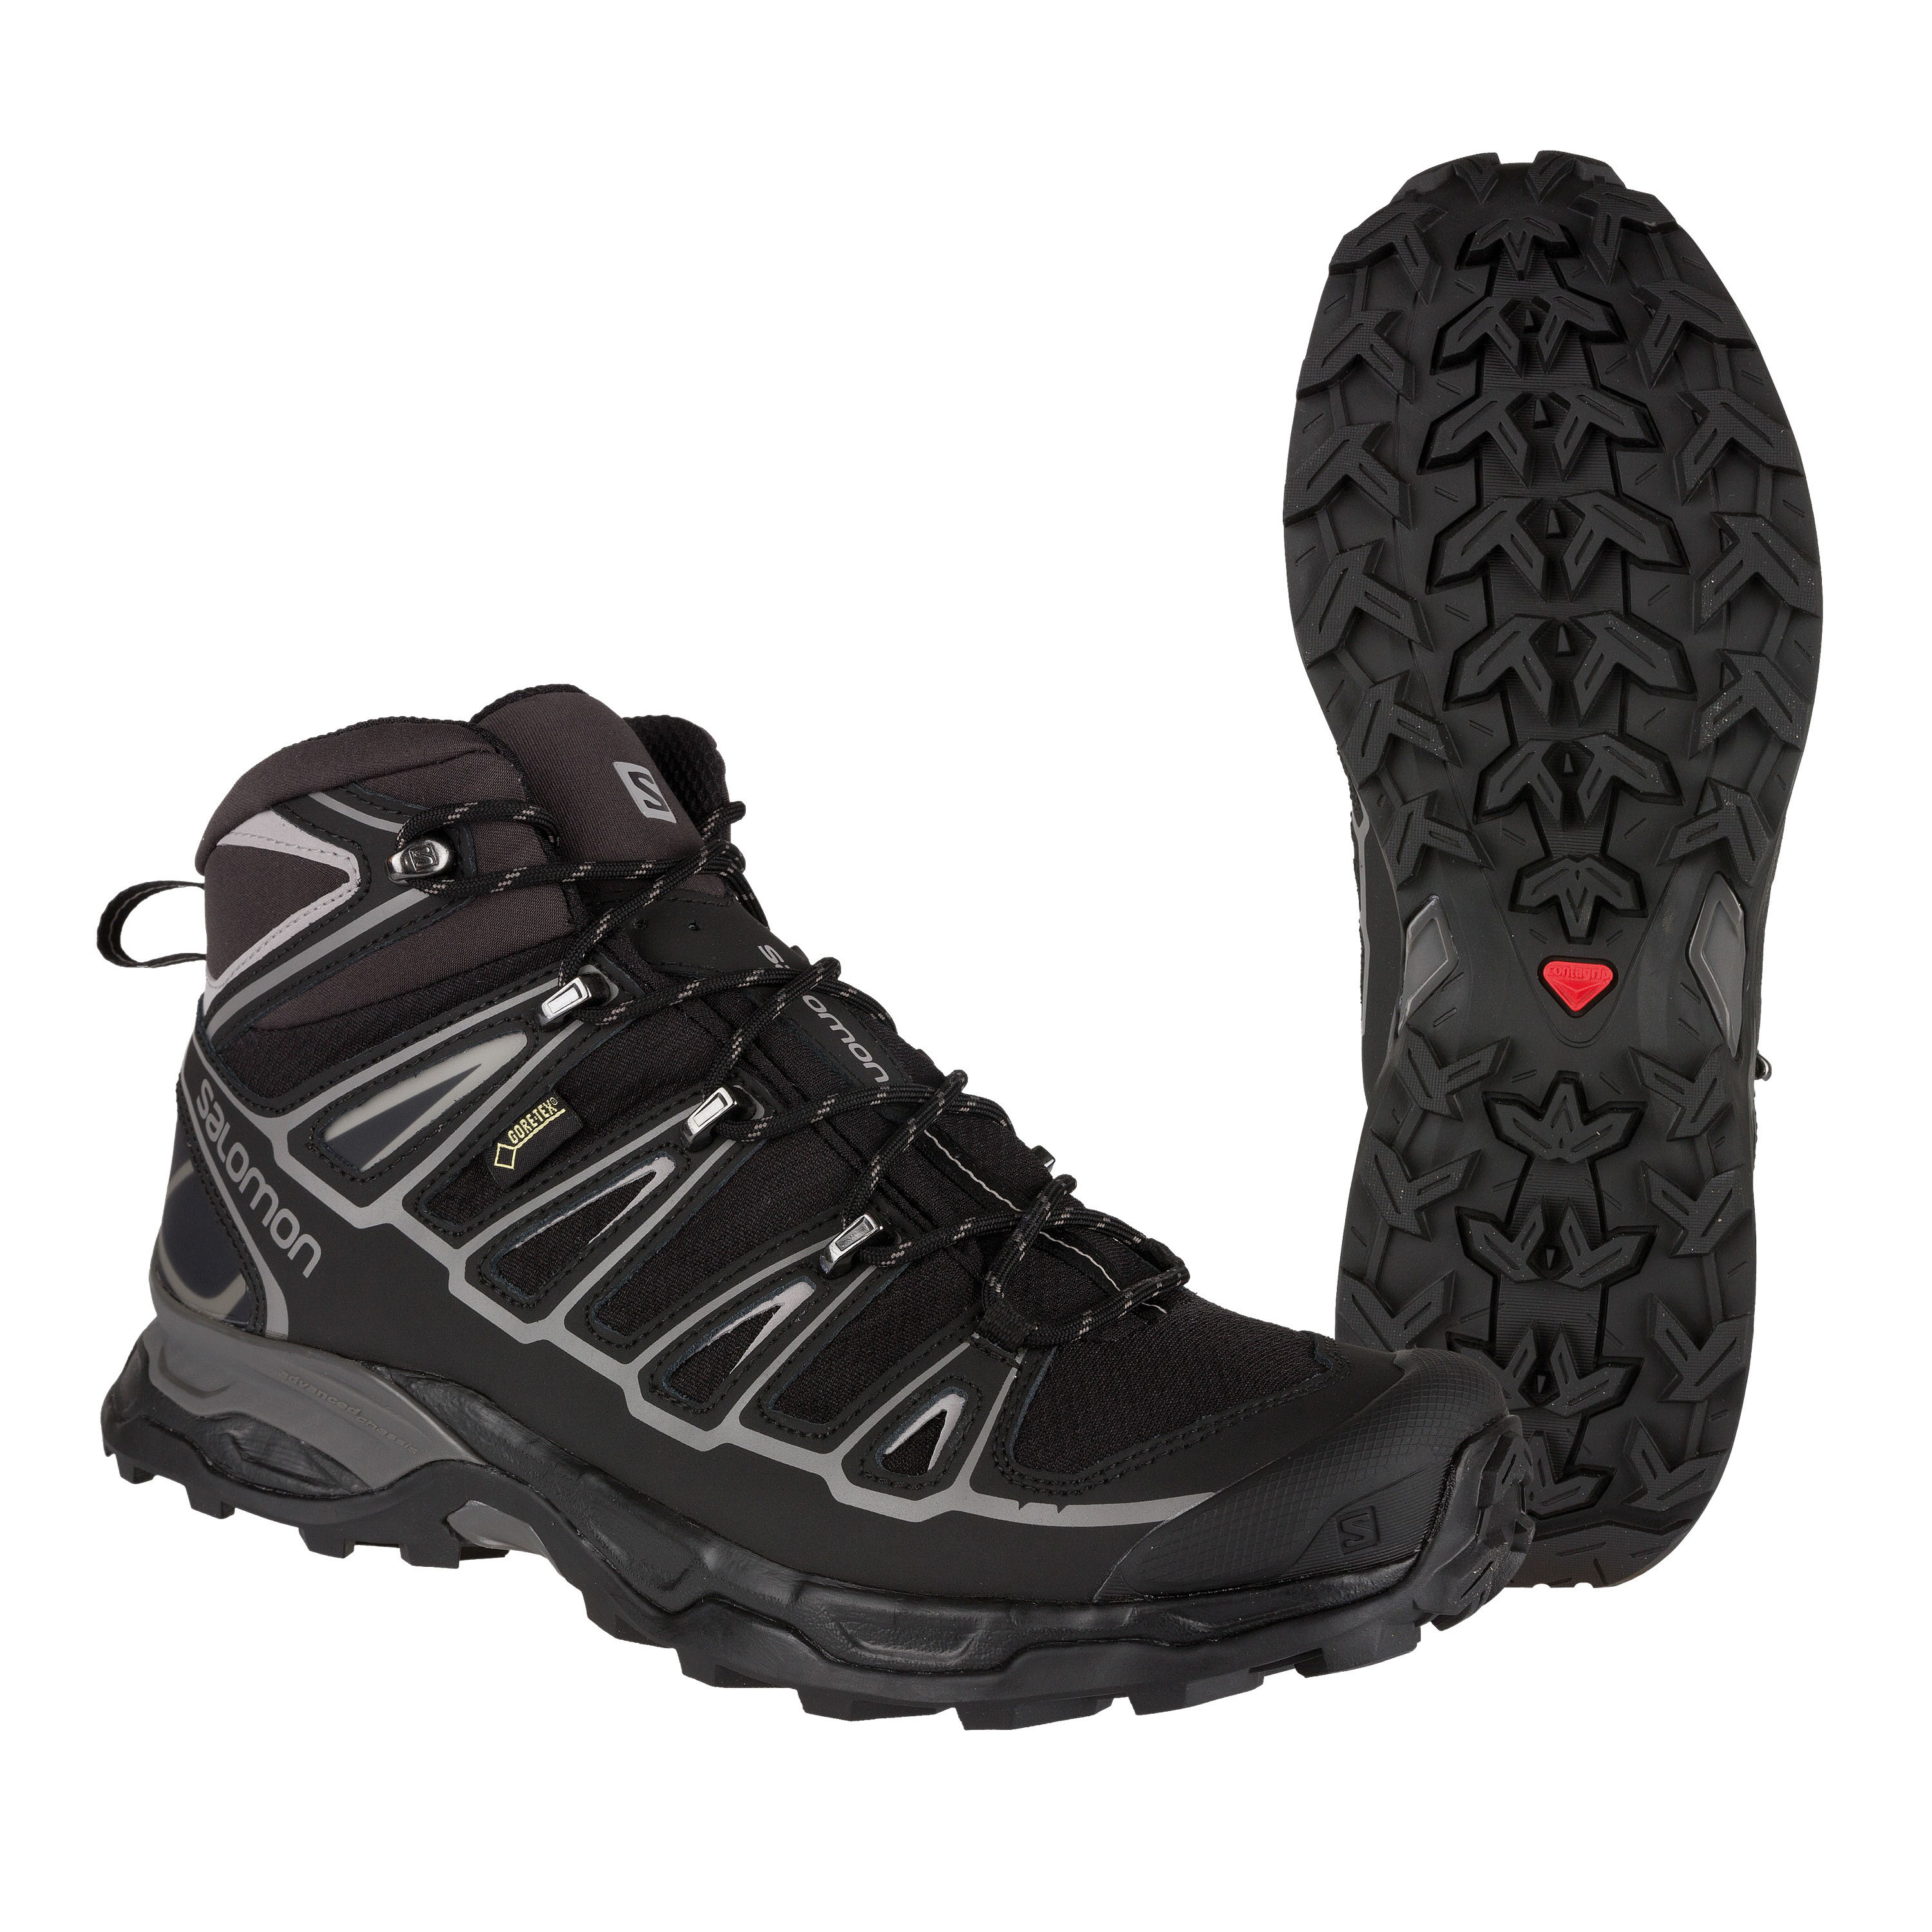 Shoe Salomon X Ultra 2 GTX black Shoe Salomon X Ultra MID 2 GTX black | Hiking Shoes | Shoes | Footwear | Clothing